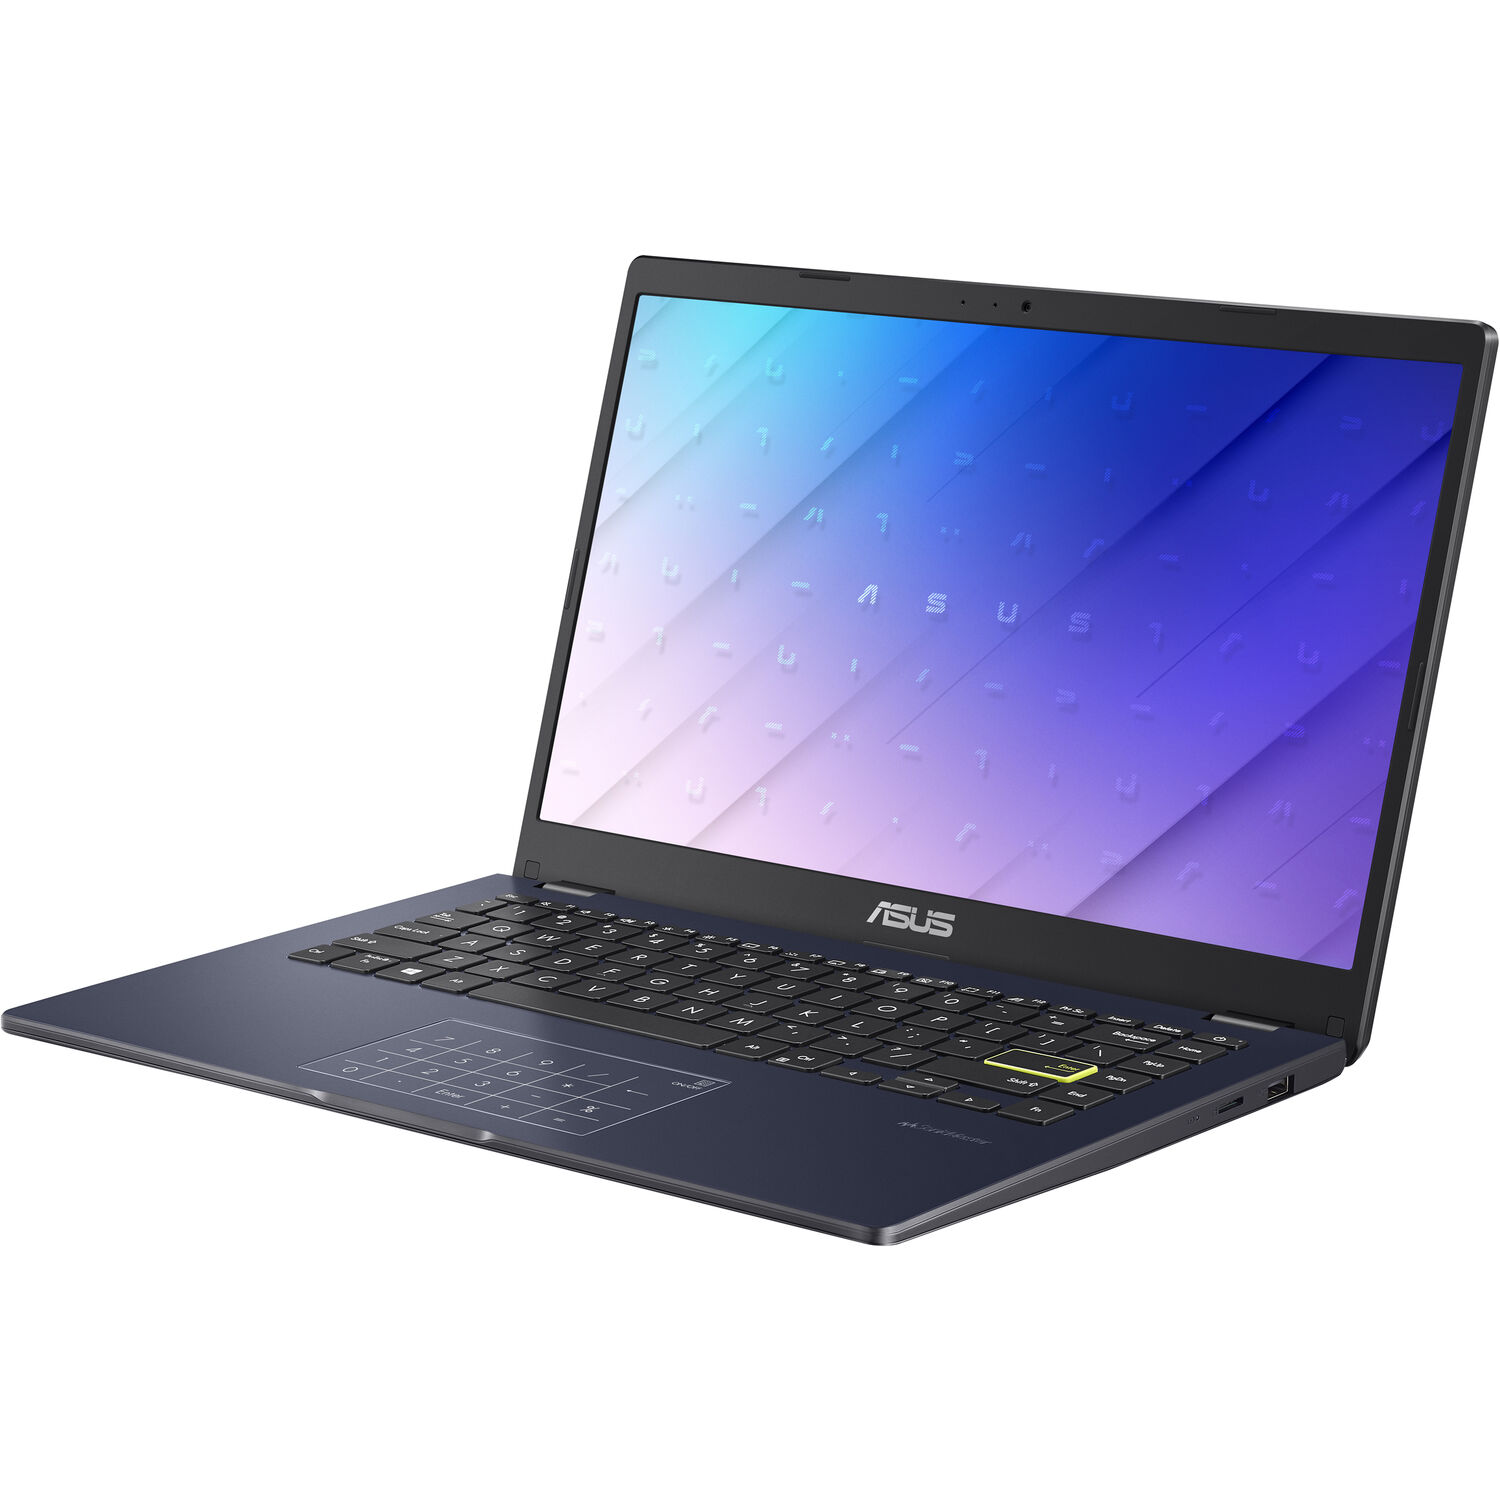 ASUS 14 L410 Everyday Value Laptop (Intel Celeron N4020 2-Core, 4GB RAM, 64GB SSD + 64GB eMMC, 14.0" Full HD (1920x1080), Intel UHD 600, Wifi, Bluetooth, Webcam, 1xUSB 3.2, 1xHDMI, Win 10 Home) - image 4 of 6